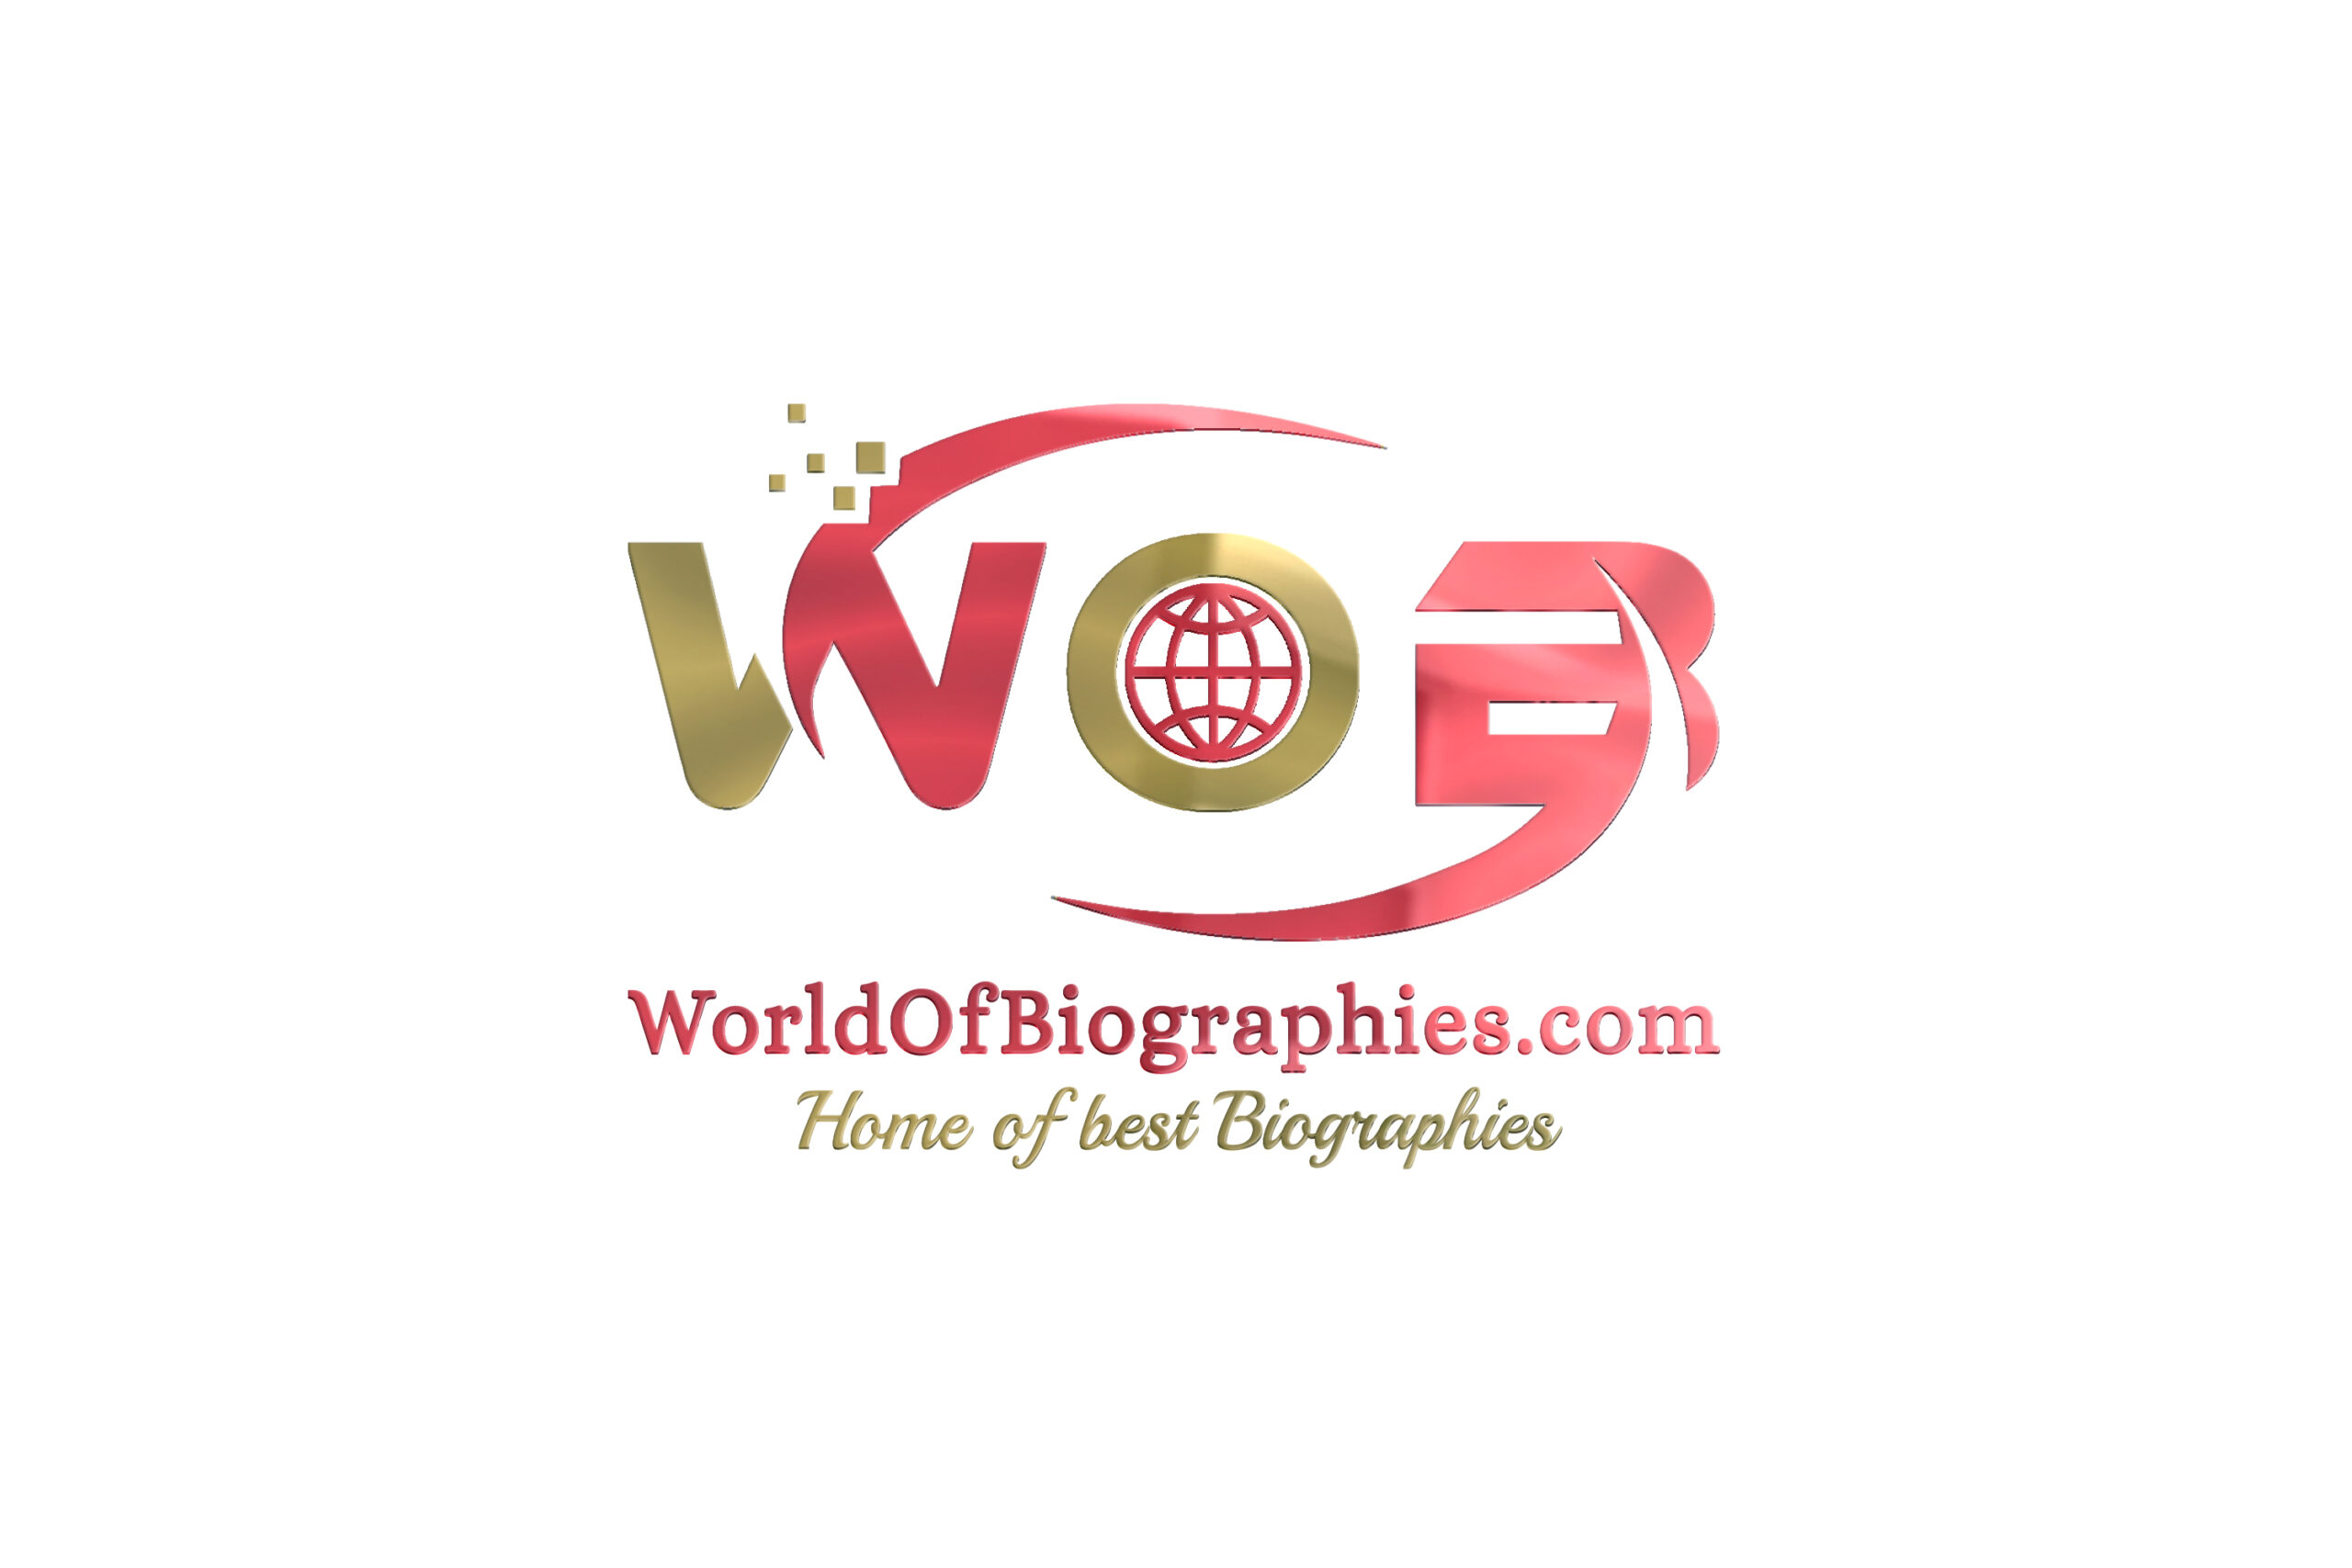 WORLDOFBIOGRAPHIES